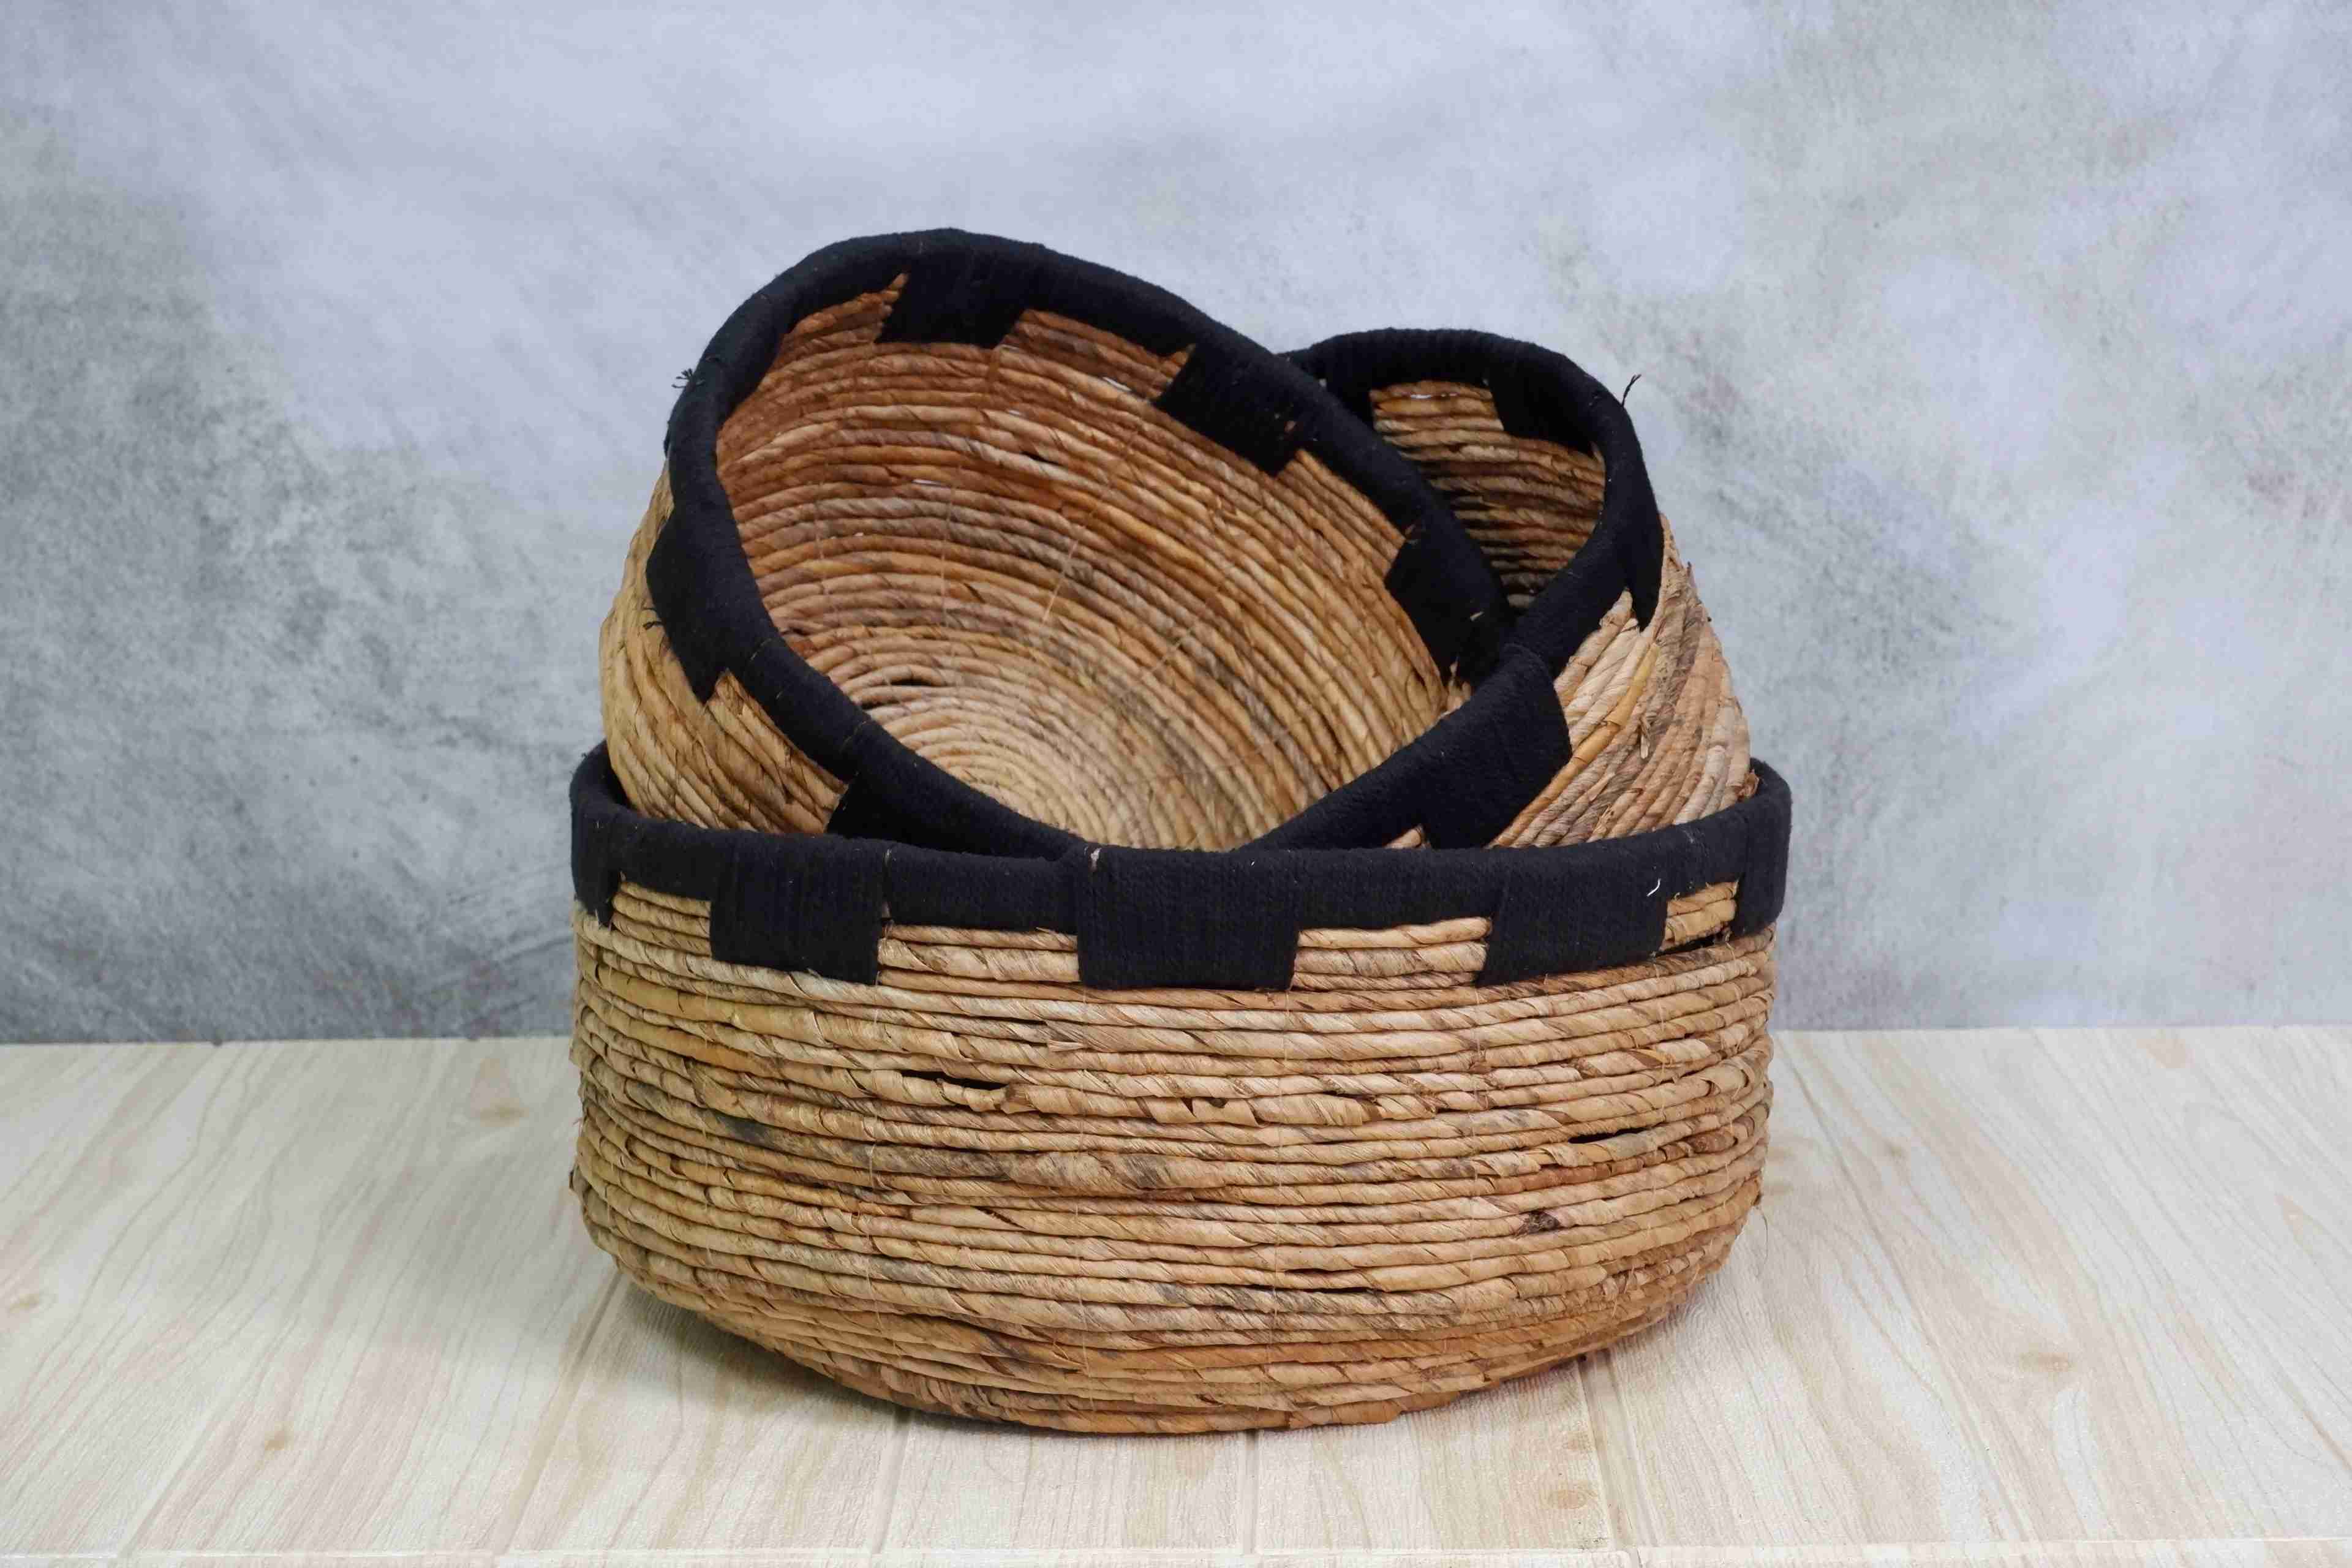 Indah baskets